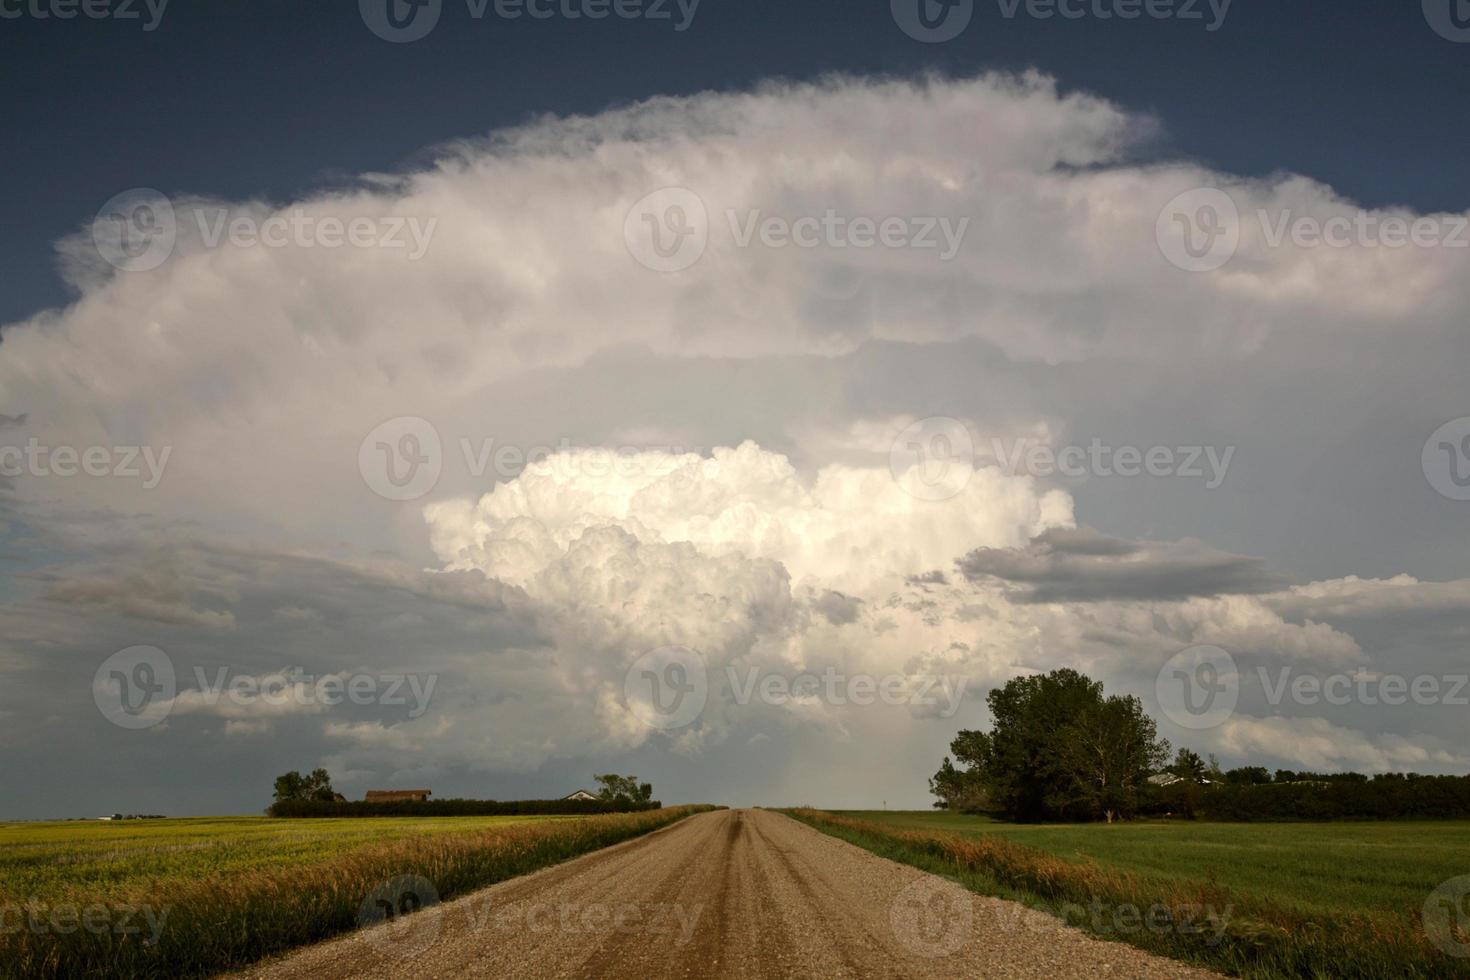 nuvens de tempestade na estrada rural de saskatchewan foto